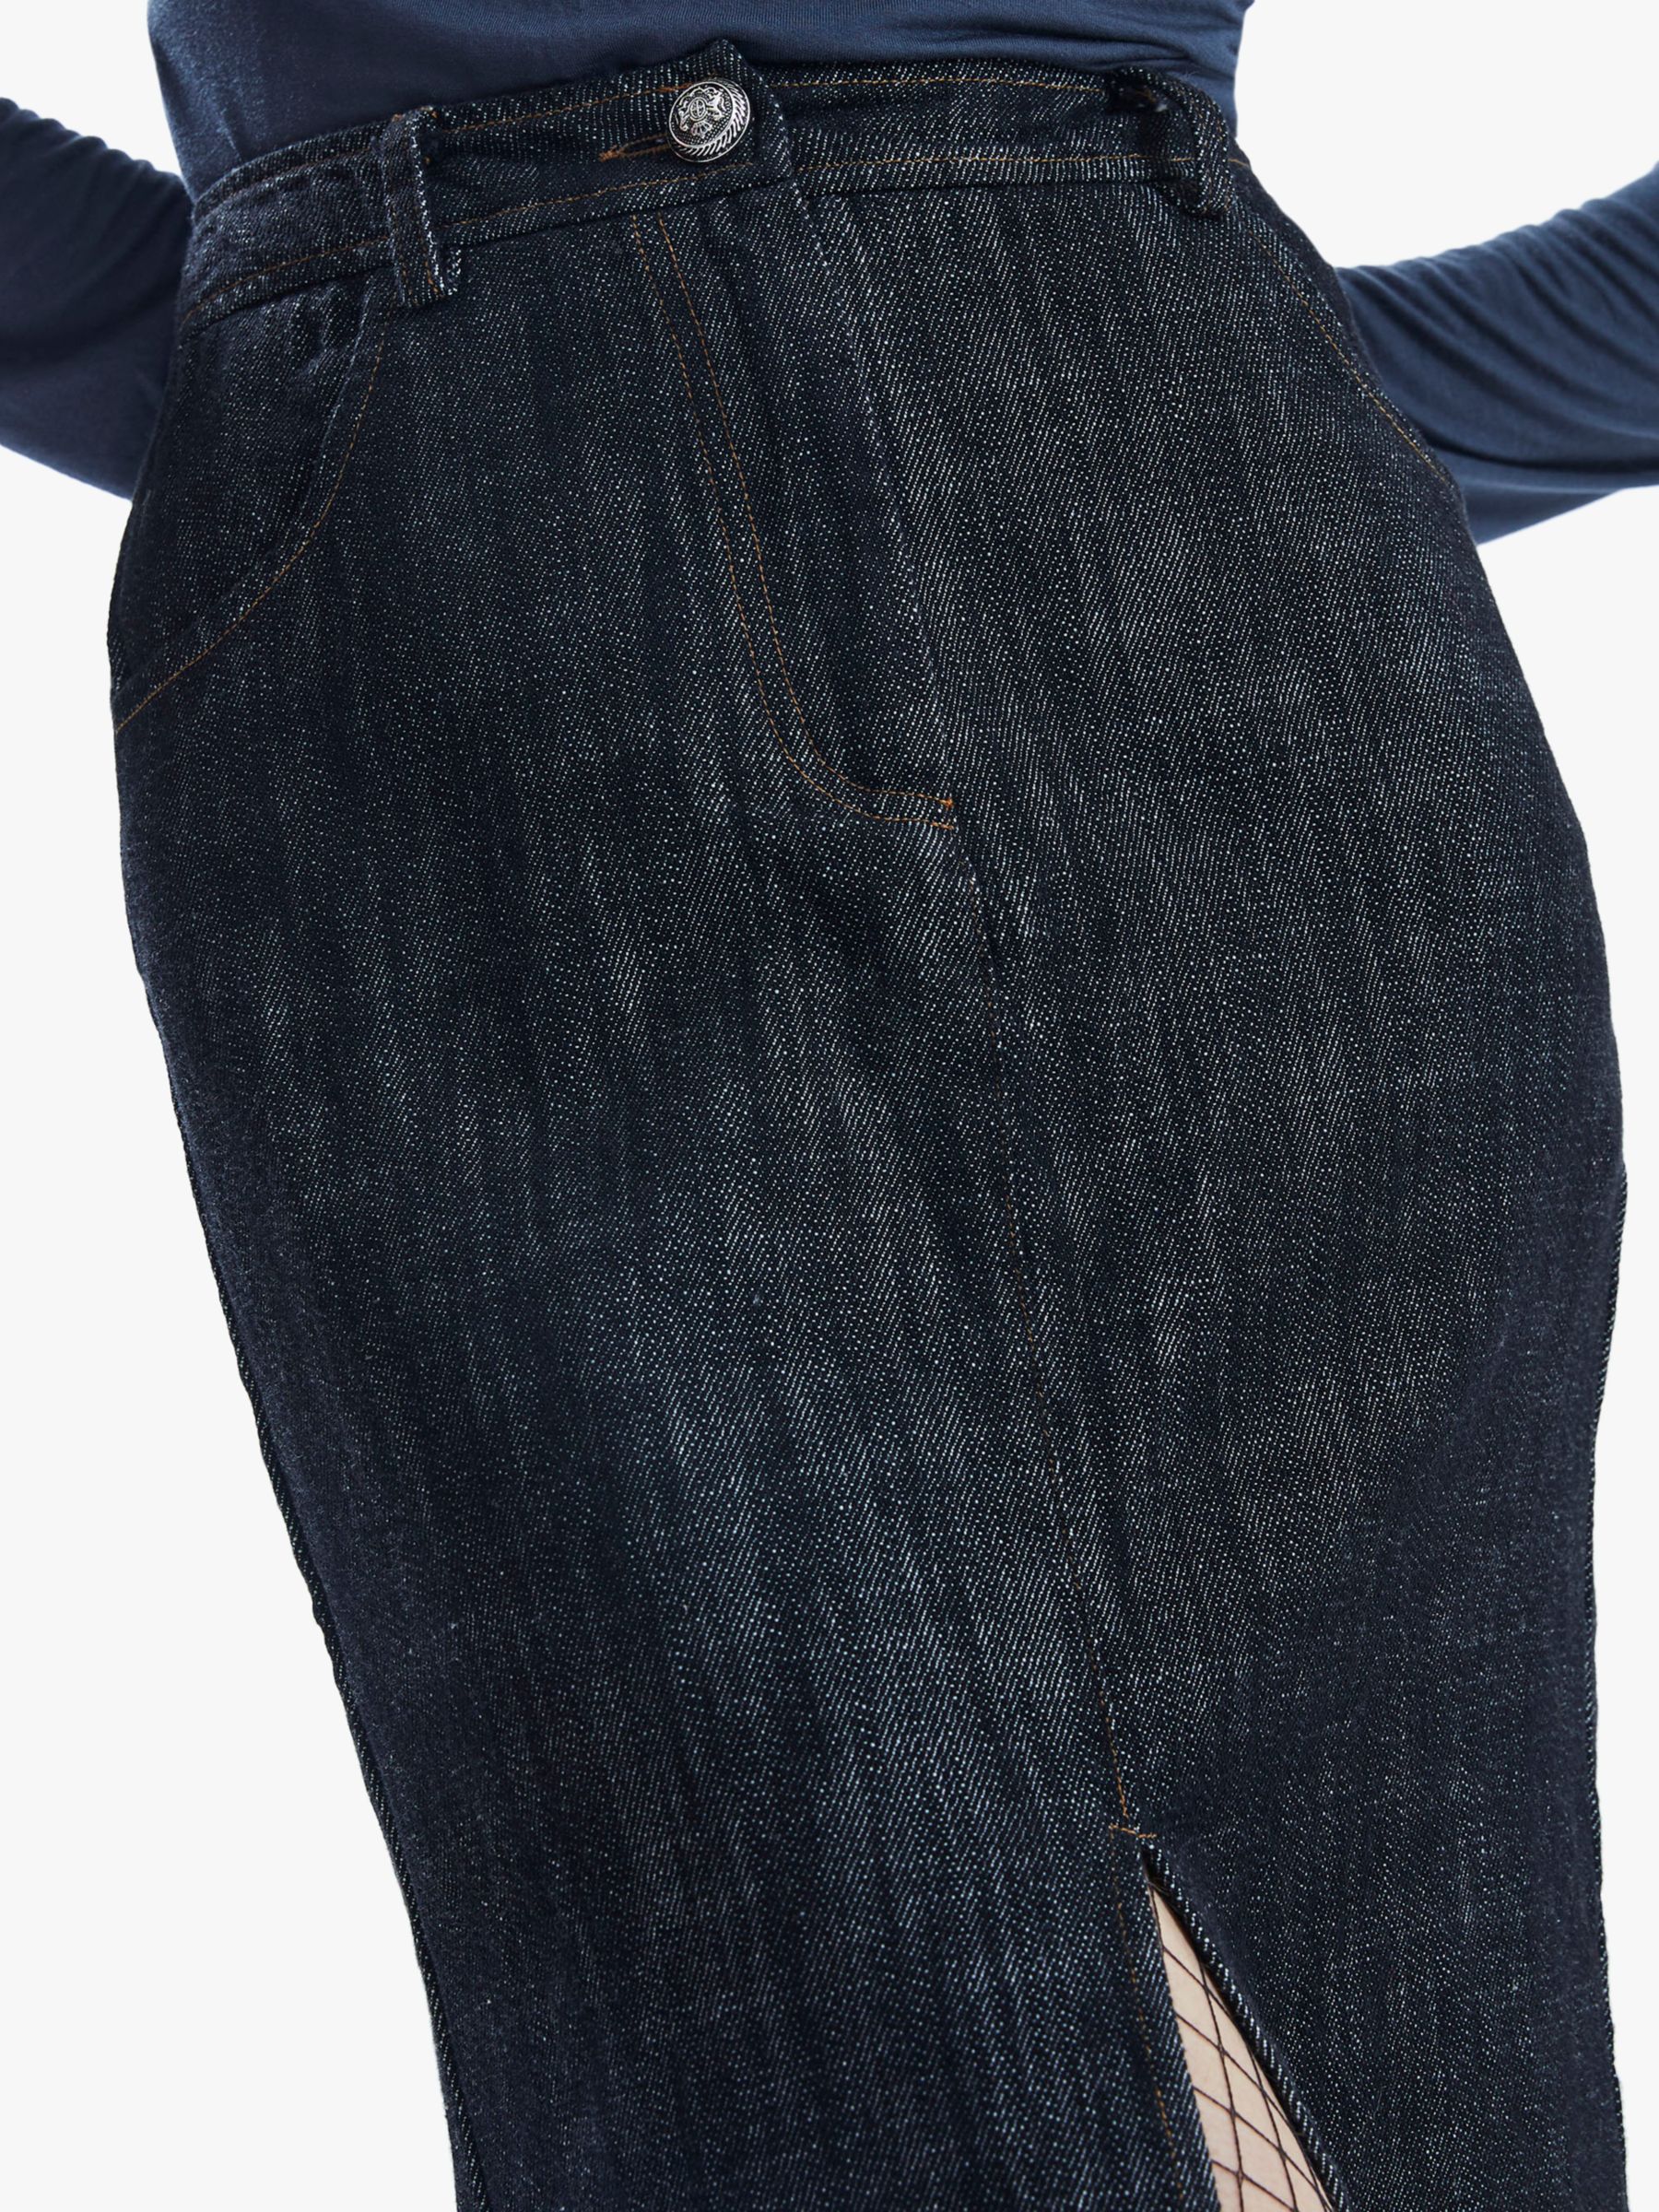 Buy James Lakeland Darck Jean Tailored Skirt, Black Online at johnlewis.com